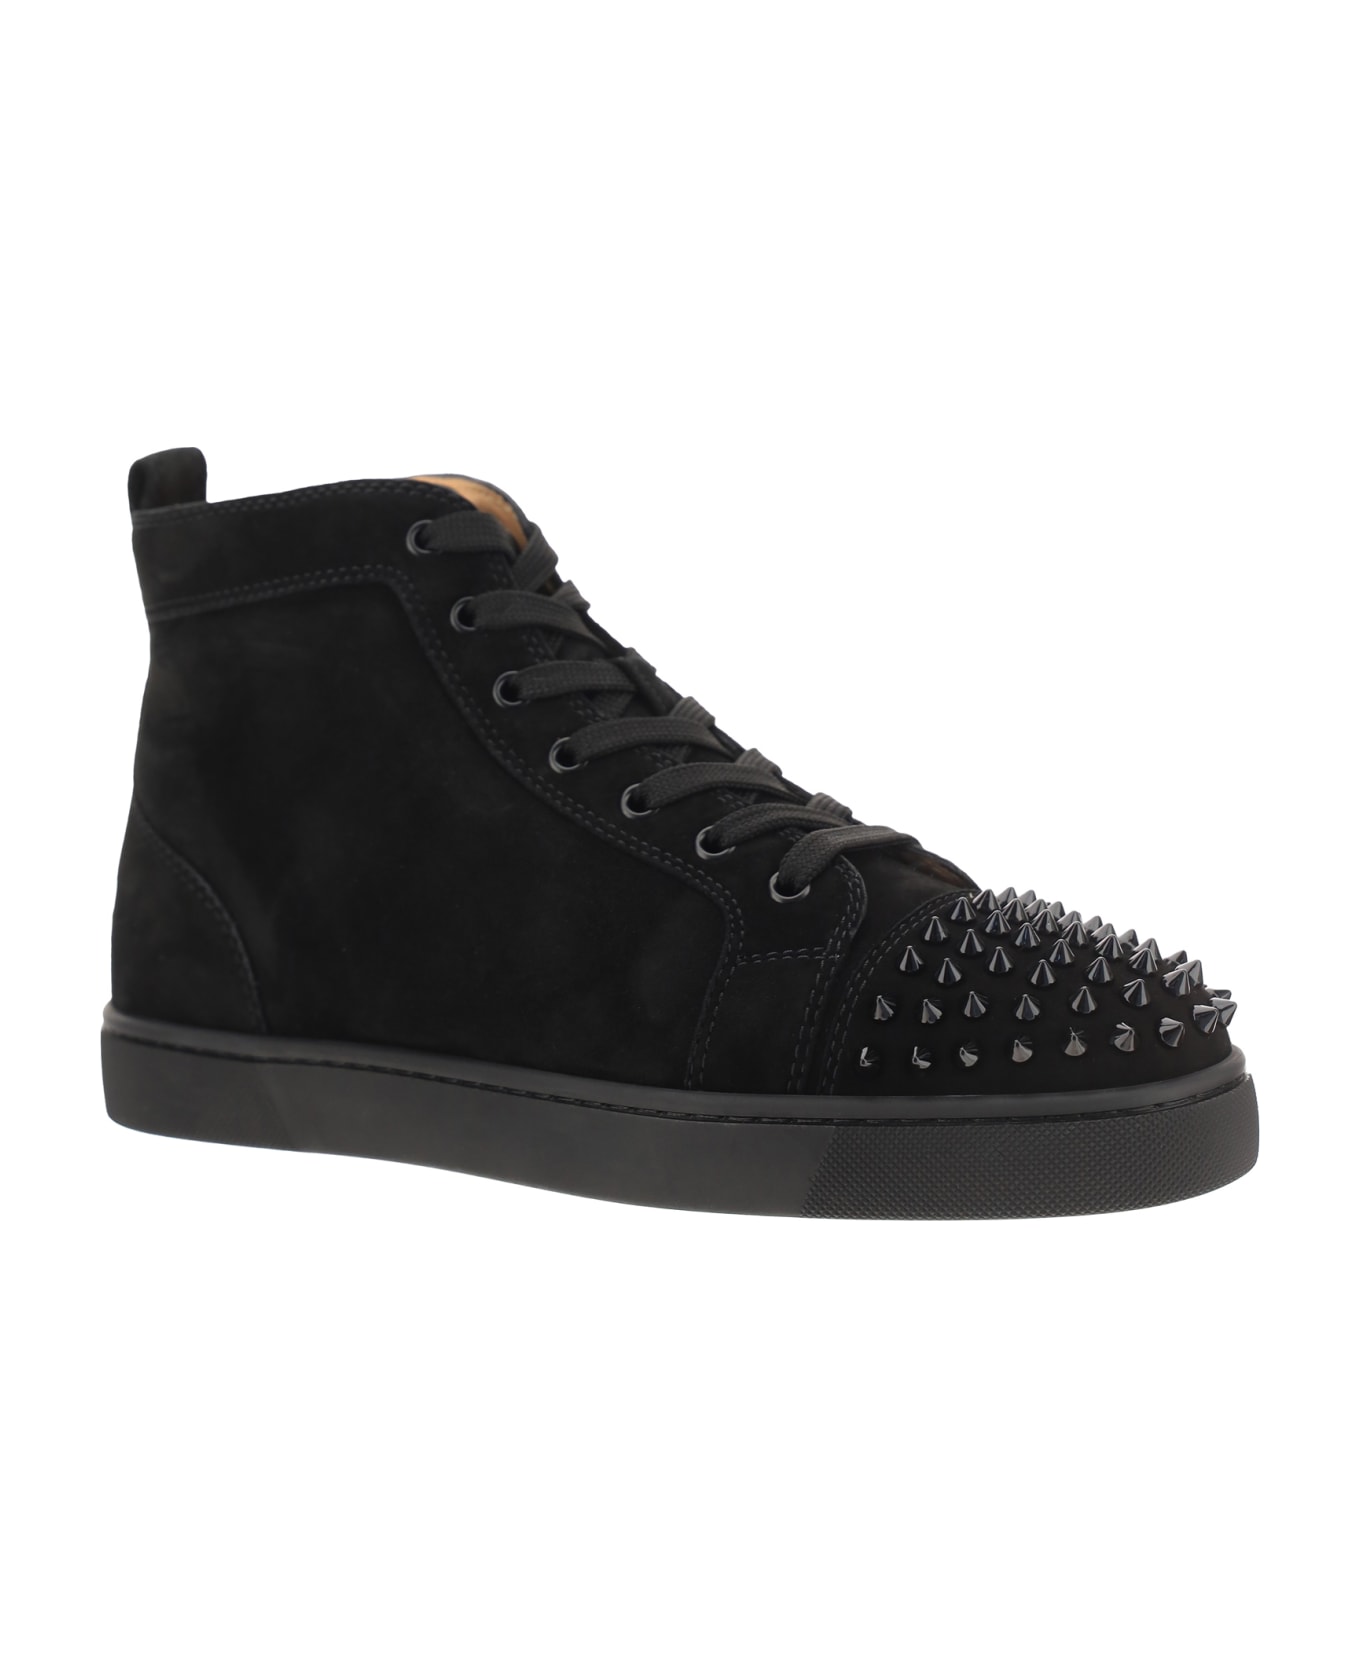 Christian Louboutin Lou Spikes Sneakers - Black/black/bk